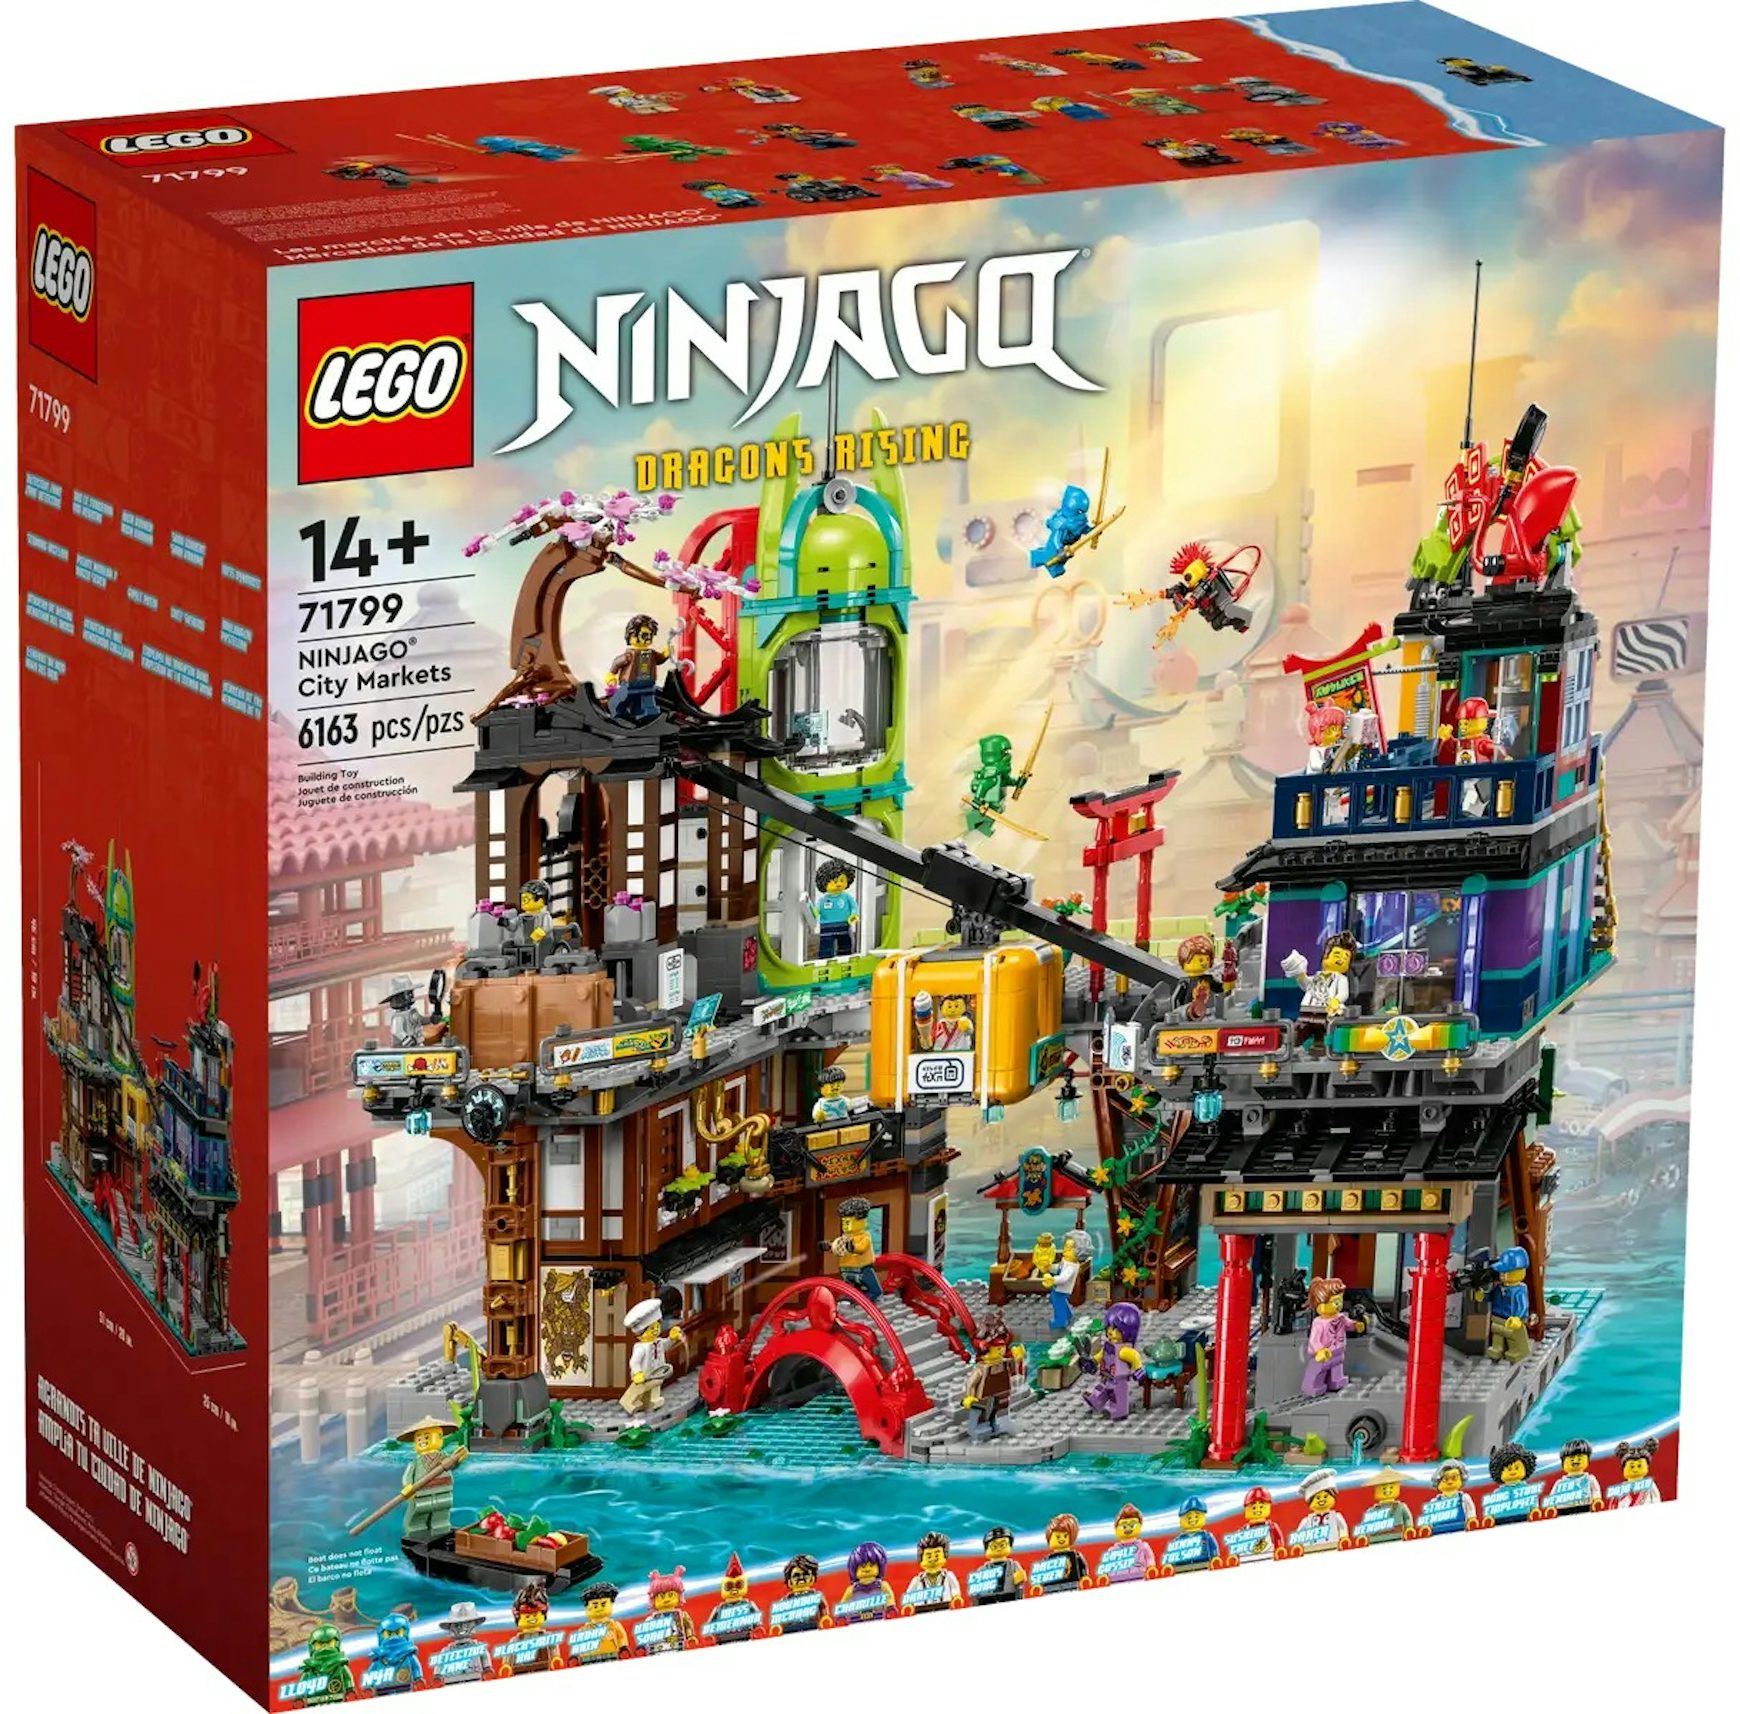 Lot of 15 Lego Mini Figures - Star Wars Harry Potter Ninjago City